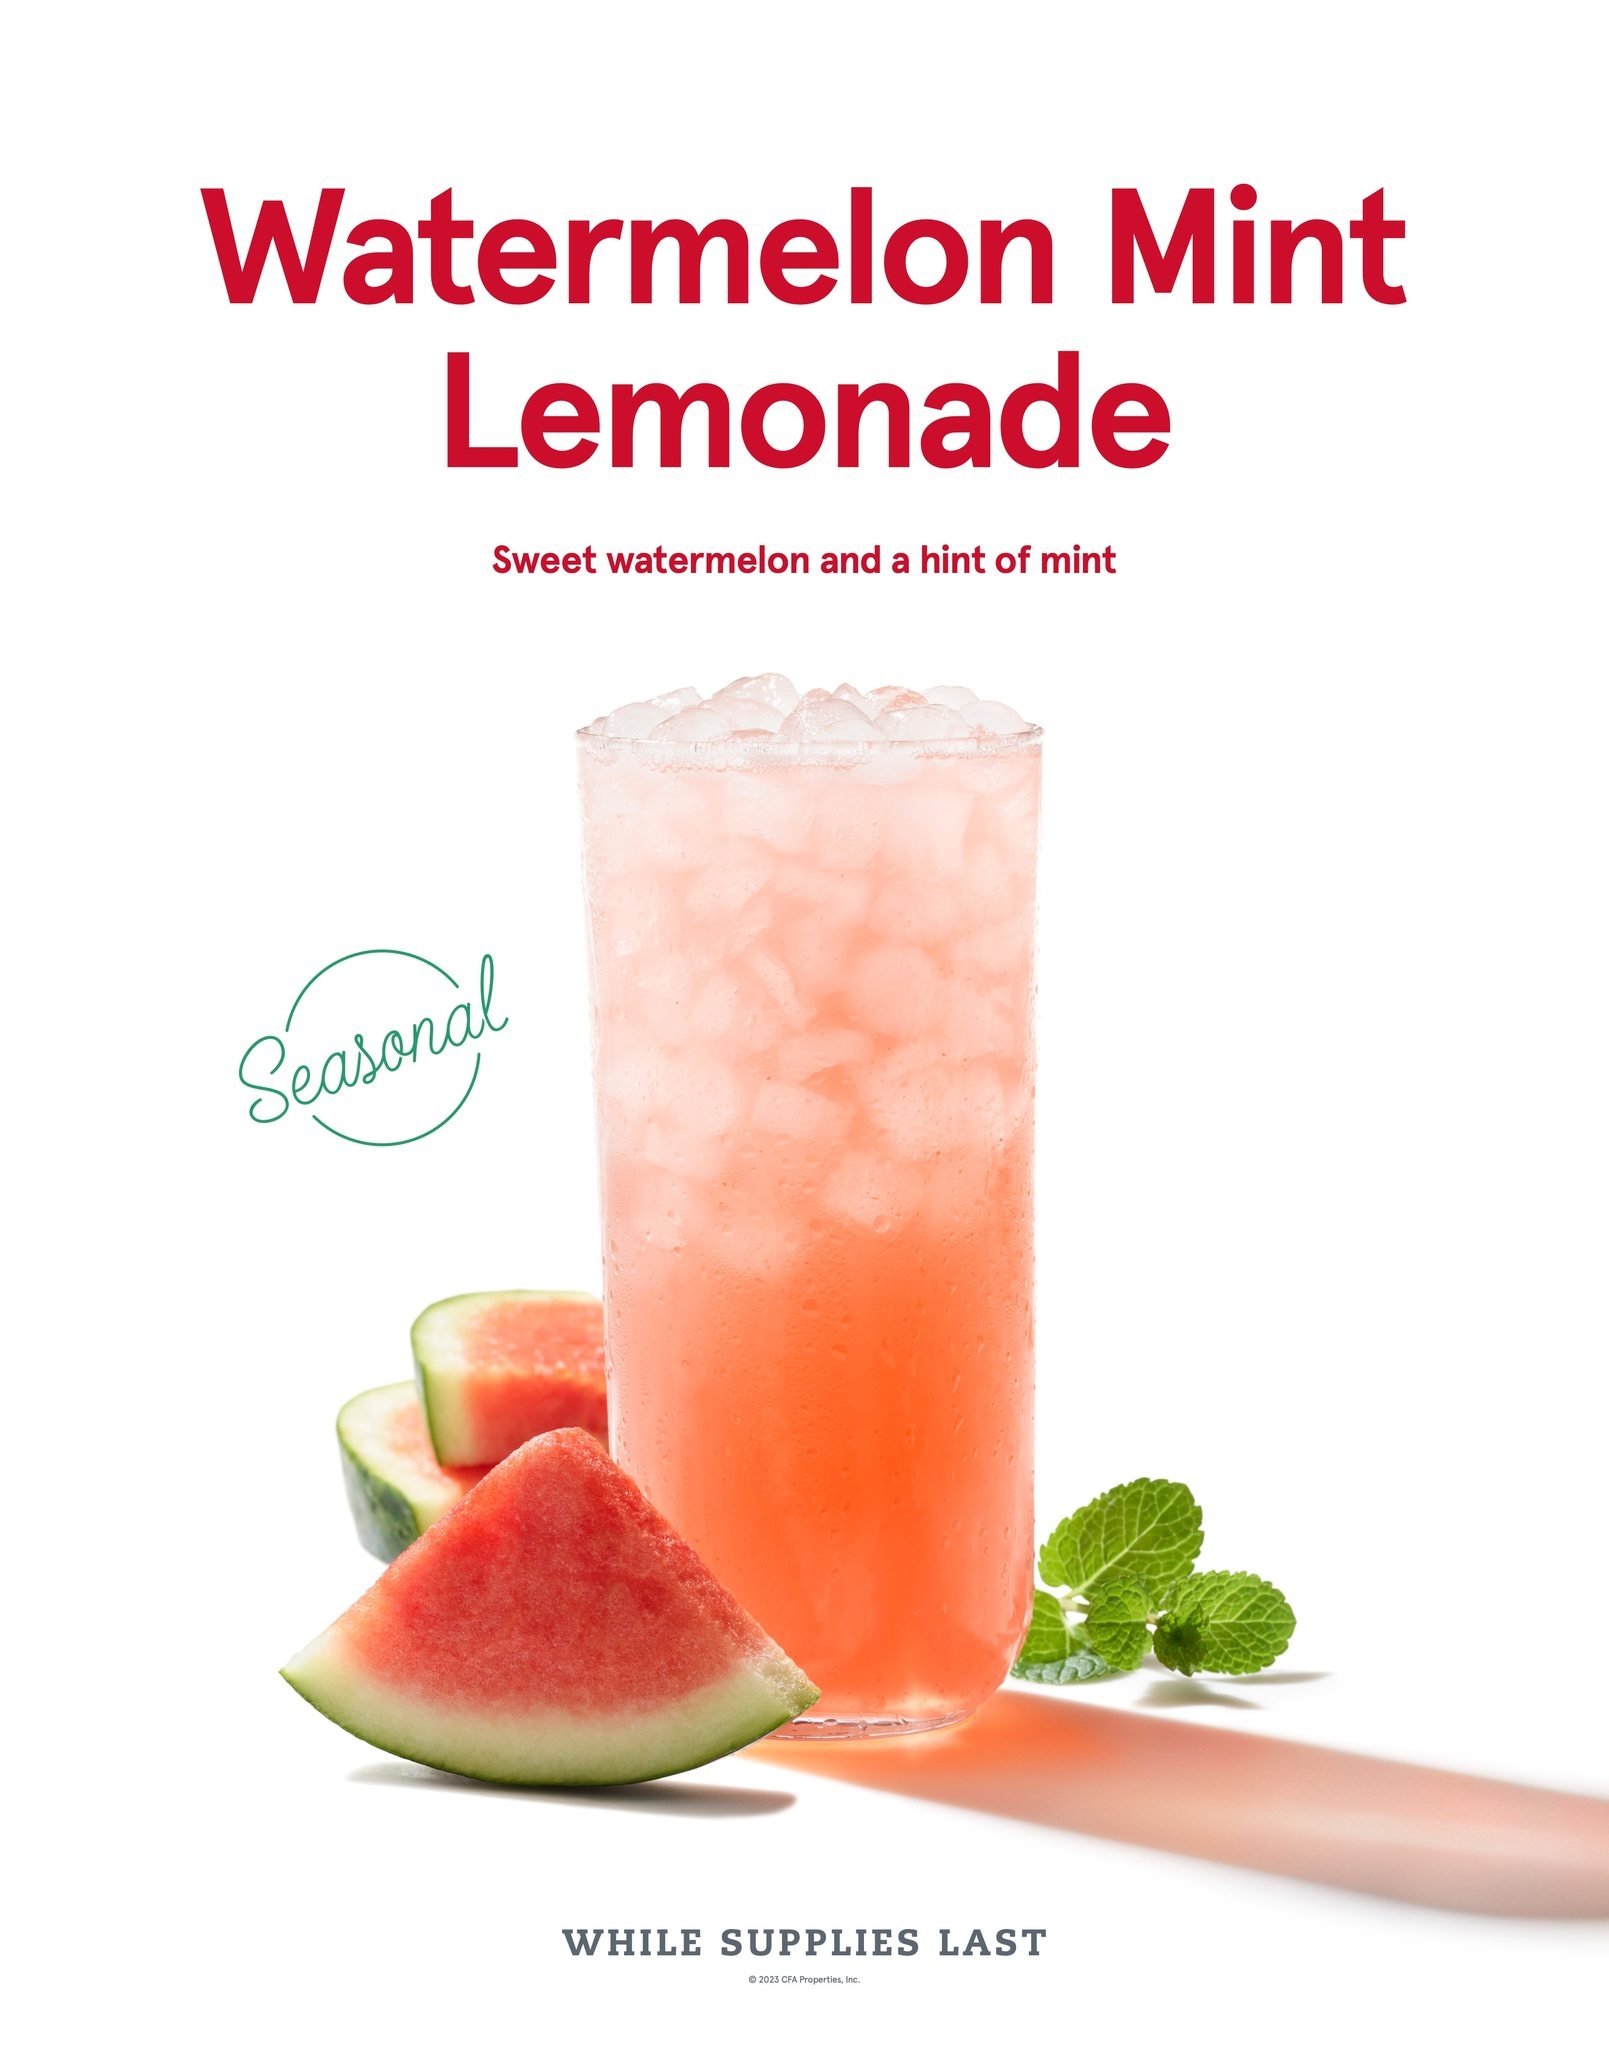 Watermelon Mint Lemonade Chick fil A Kathryn McCrary.jpeg